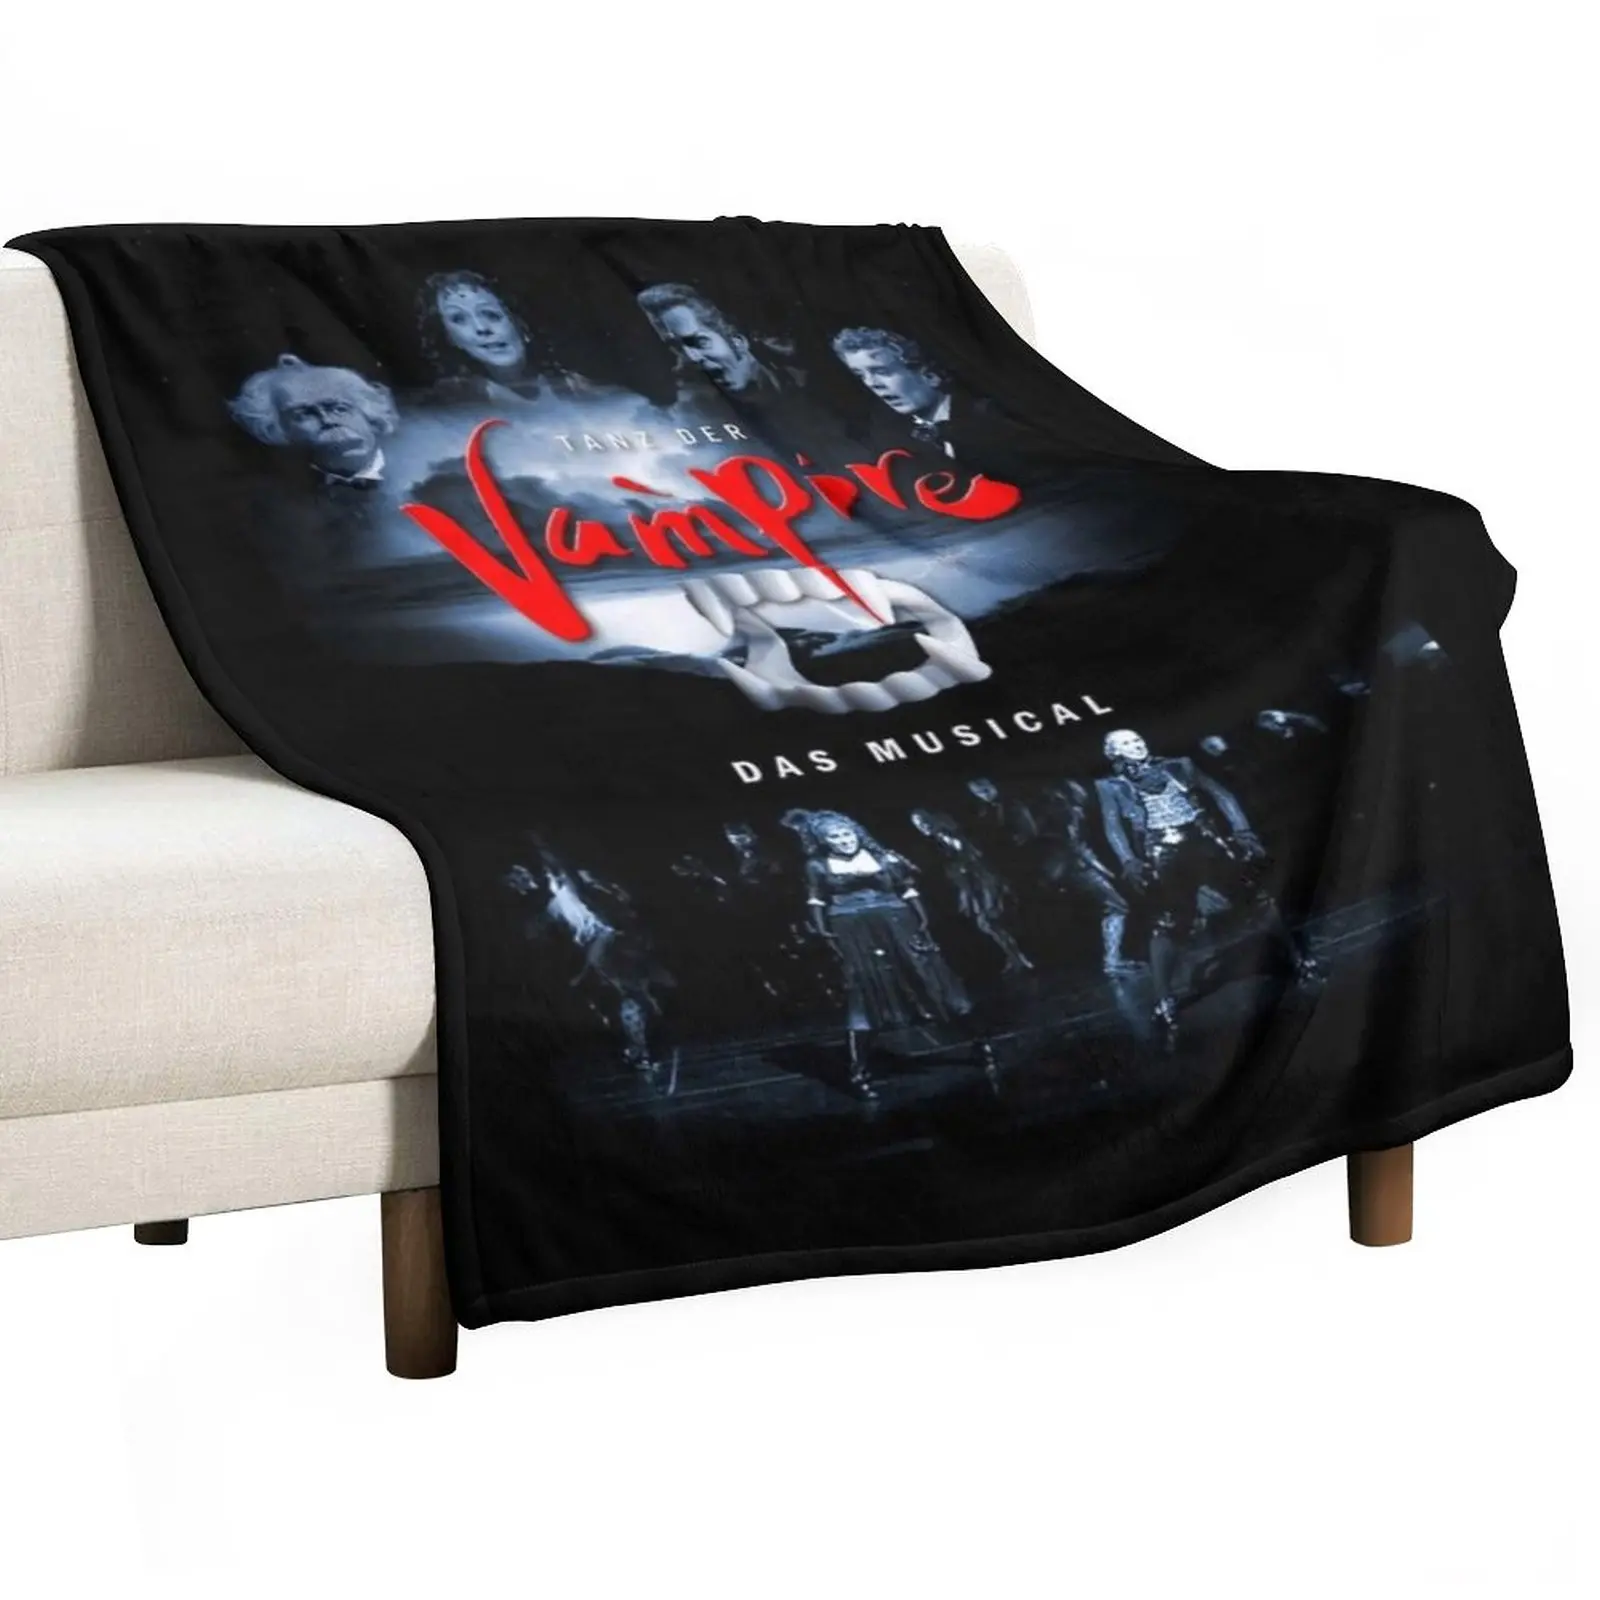 

Tanz der Vampire das musical Throw Blanket Plaid on the sofa Fluffy Soft Blankets